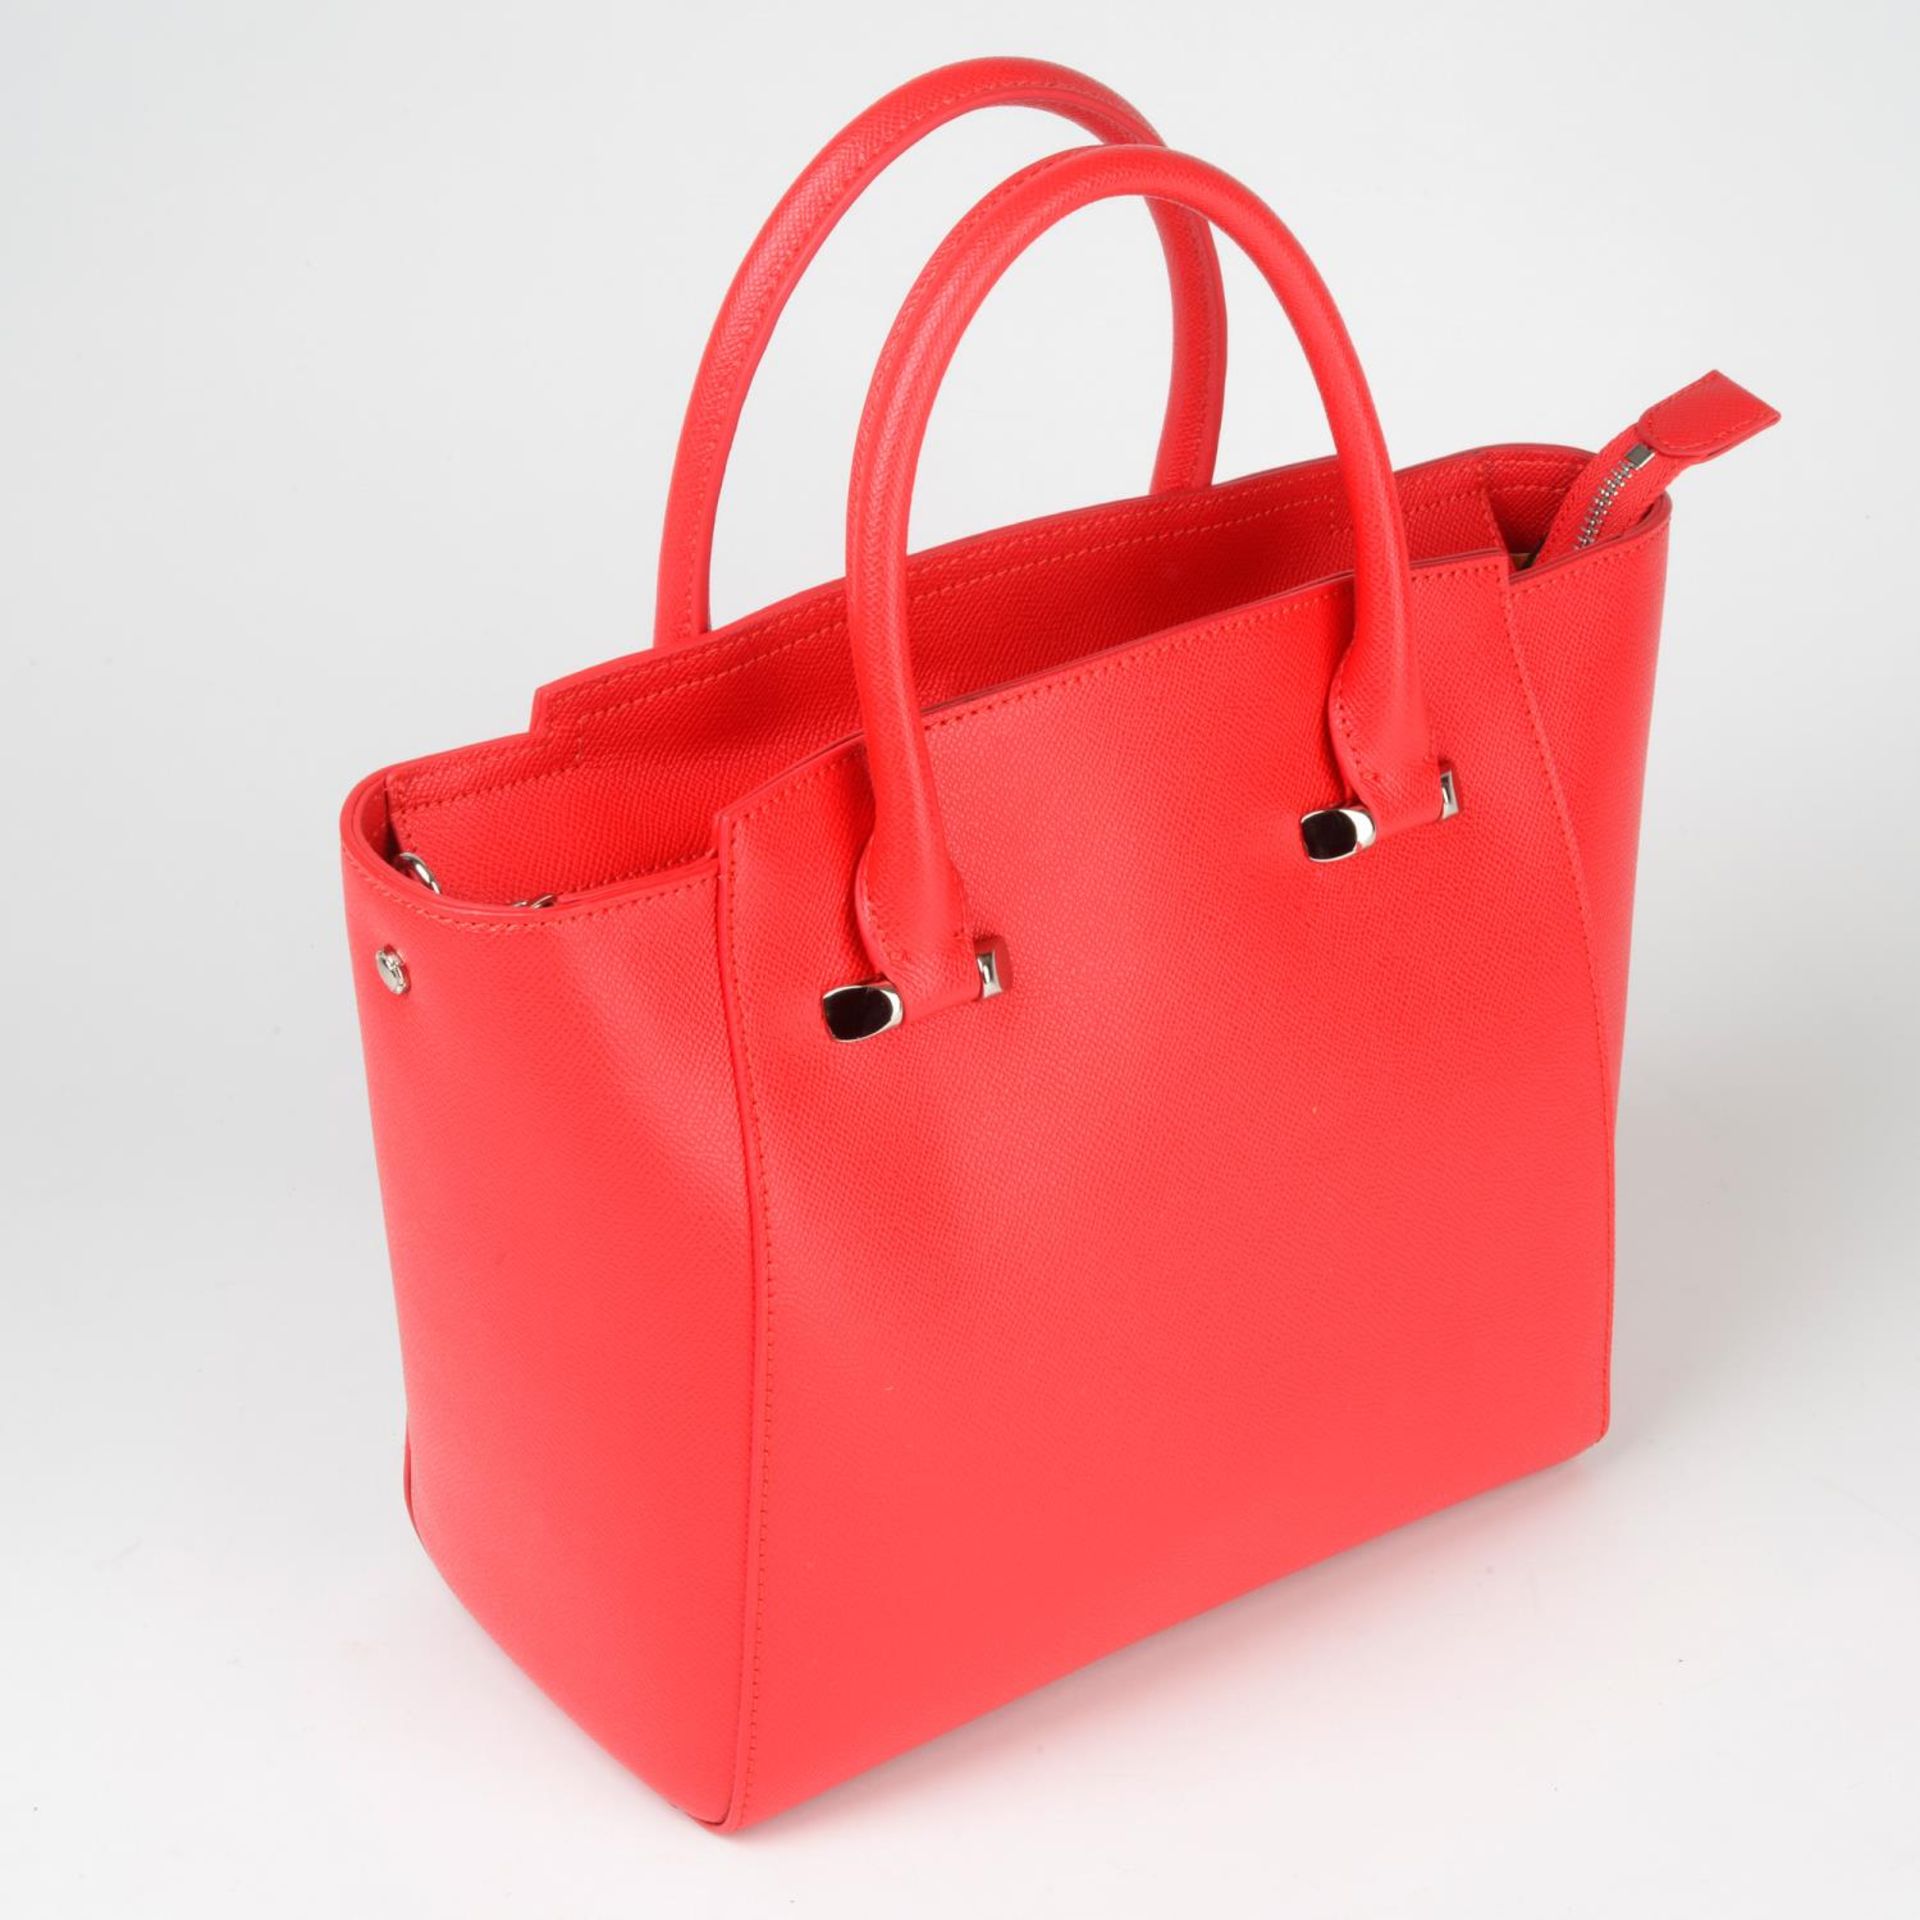 CAVALLO MODA - two leather handbags. - Bild 4 aus 5